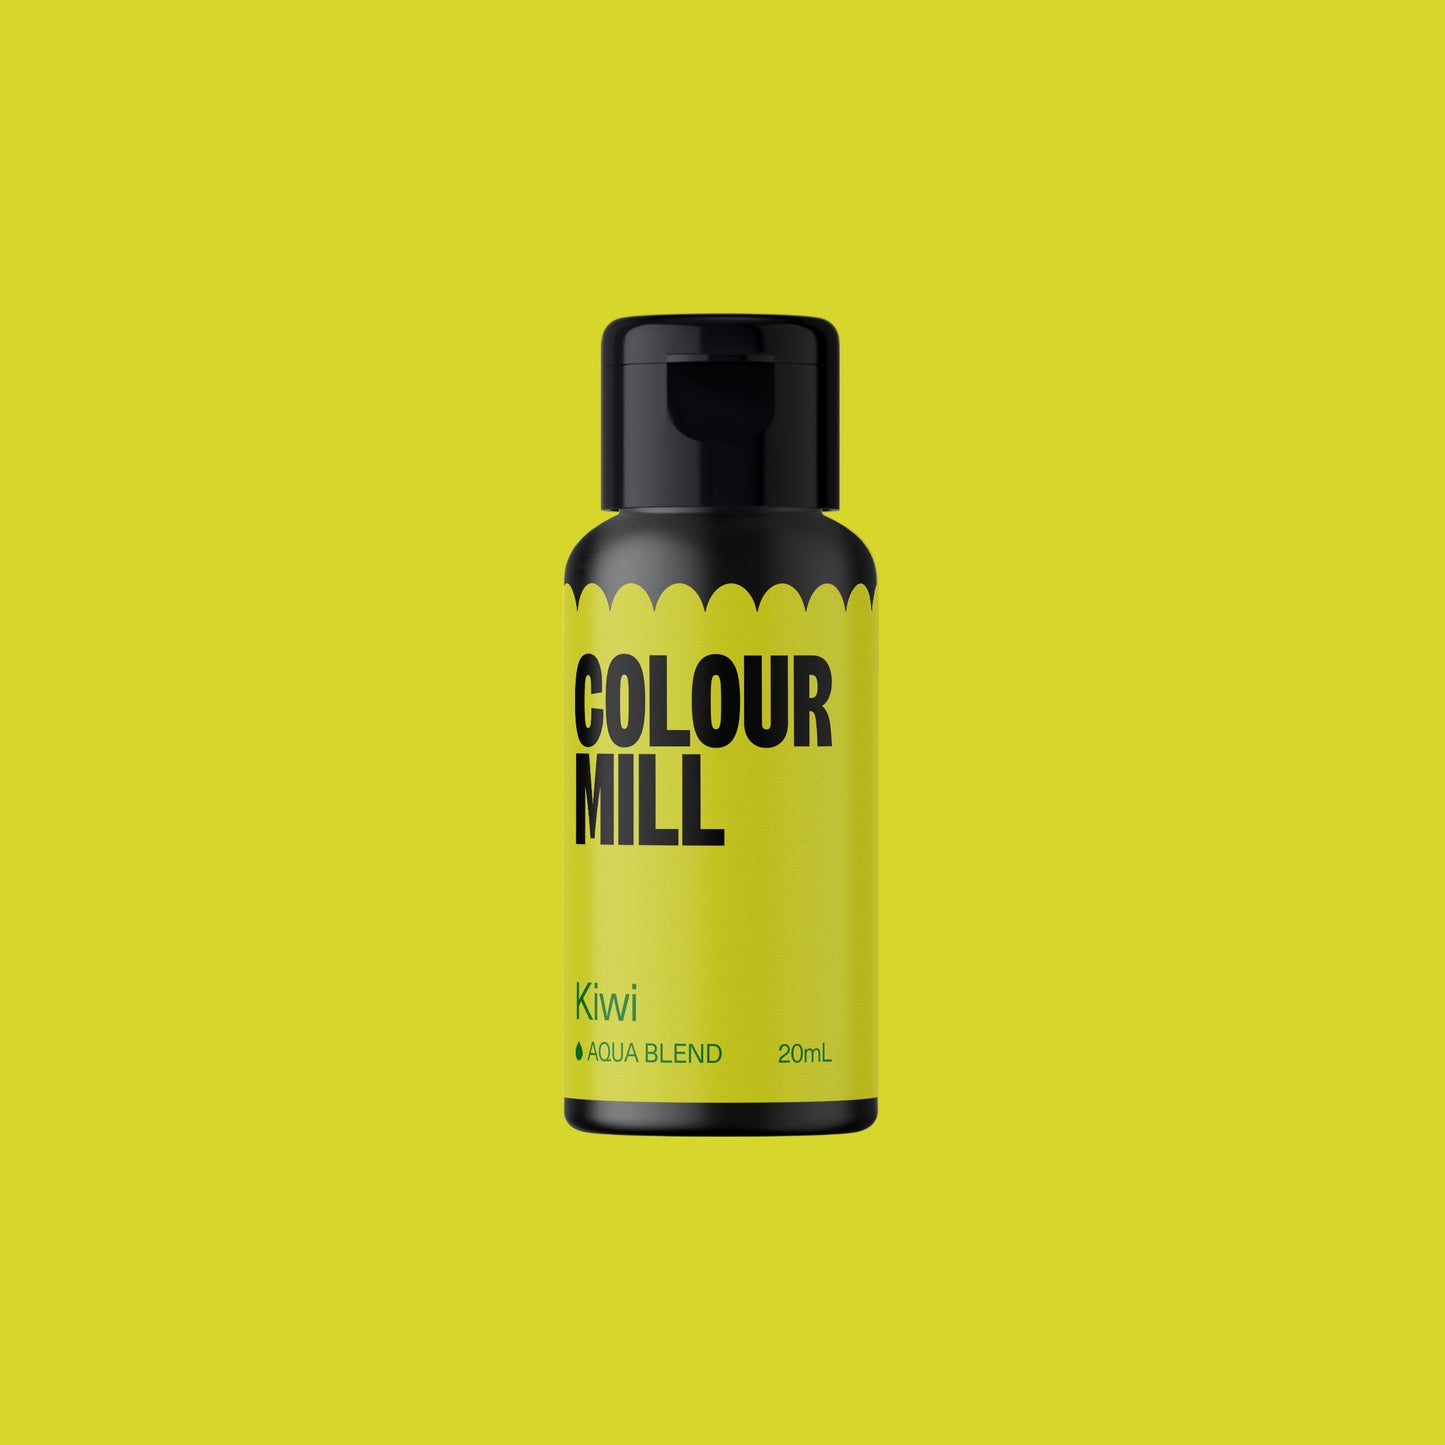 Colour Mill Aqua Blend Kiwi 20ml